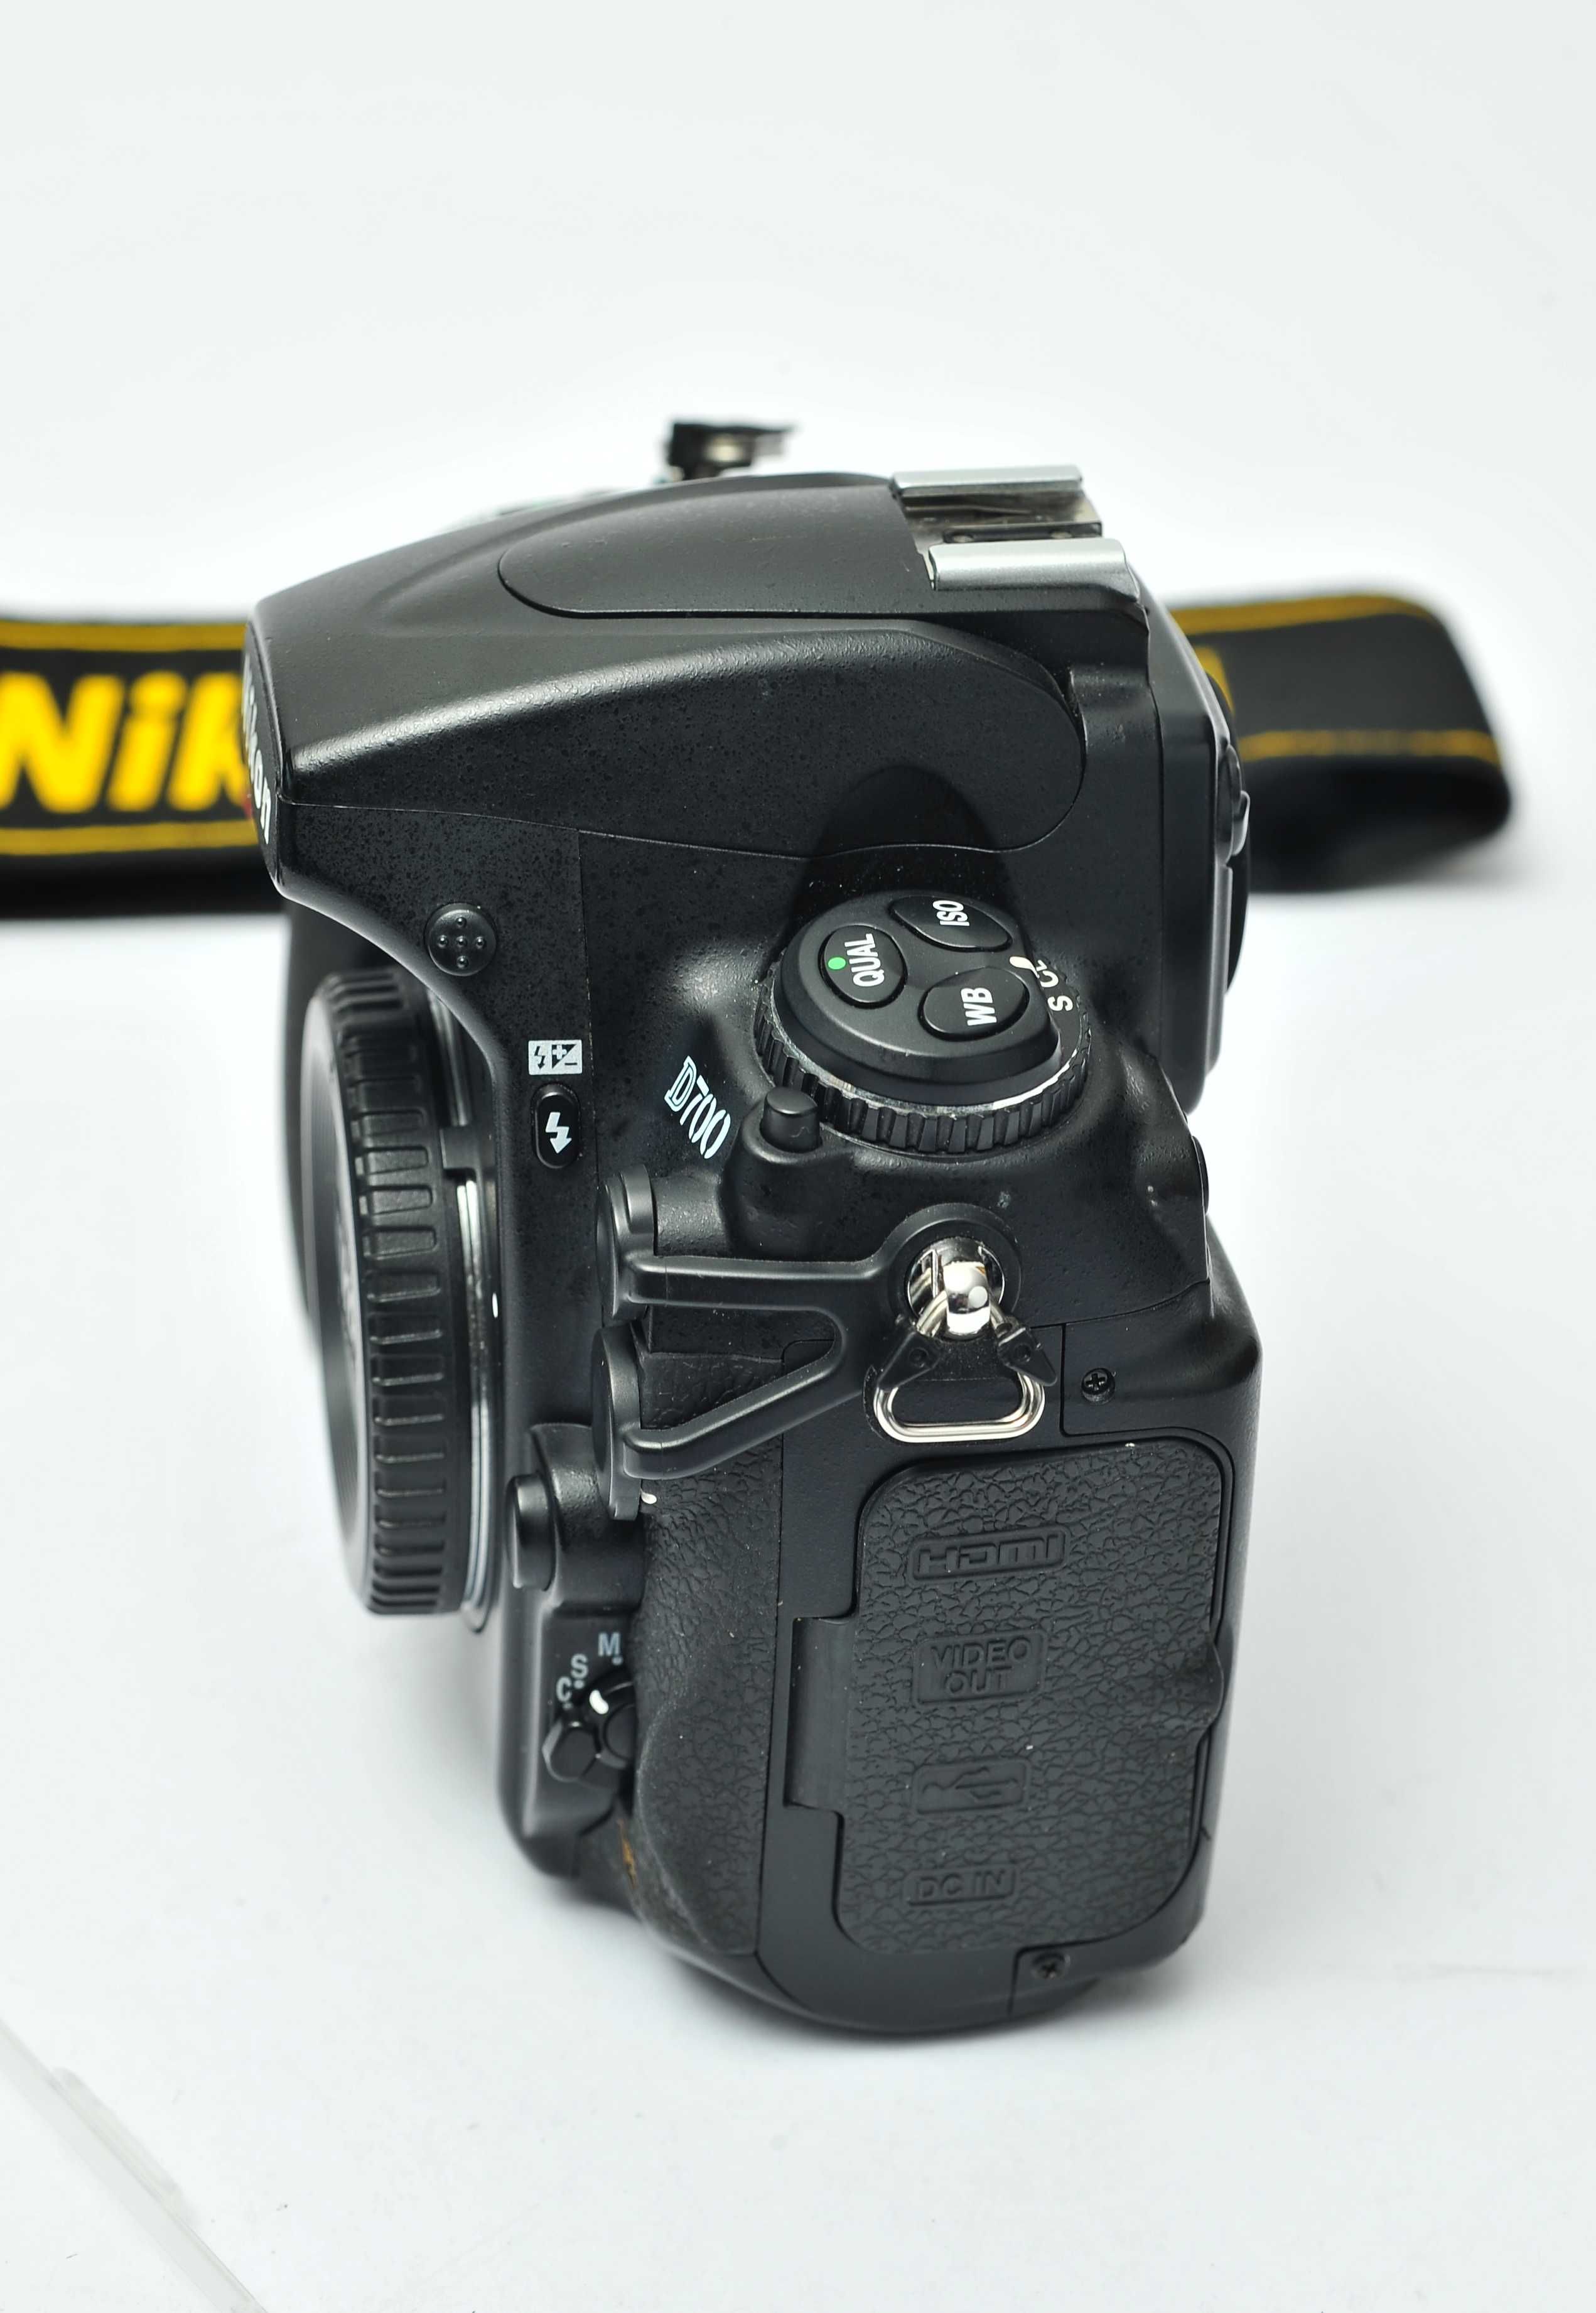 Nikon D700  (9k disparos) Excelente estado